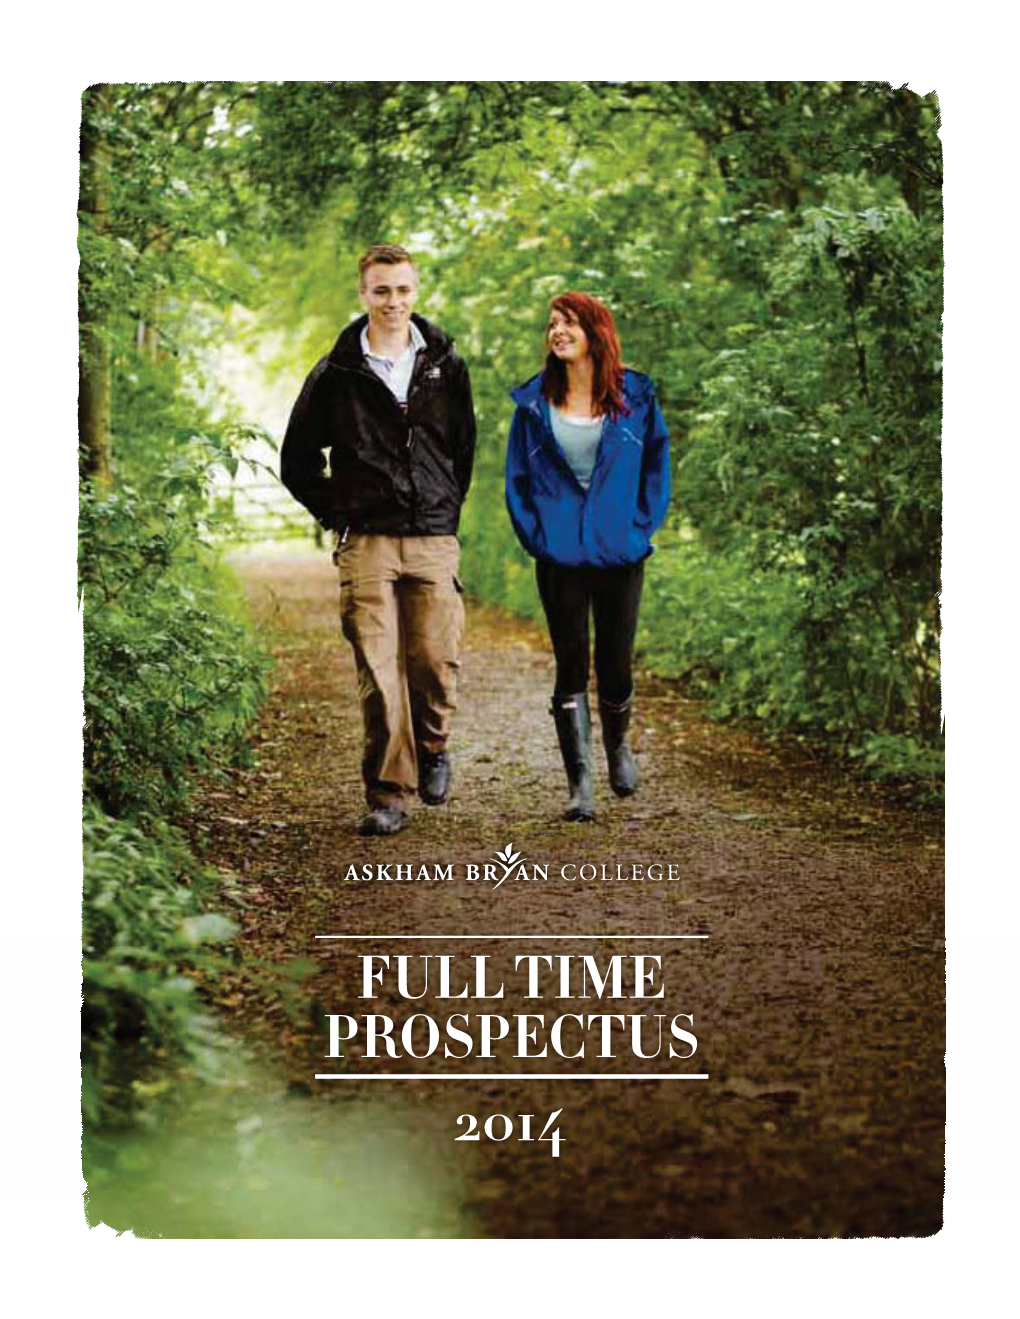 Full Time Prospectus 2014 Contents